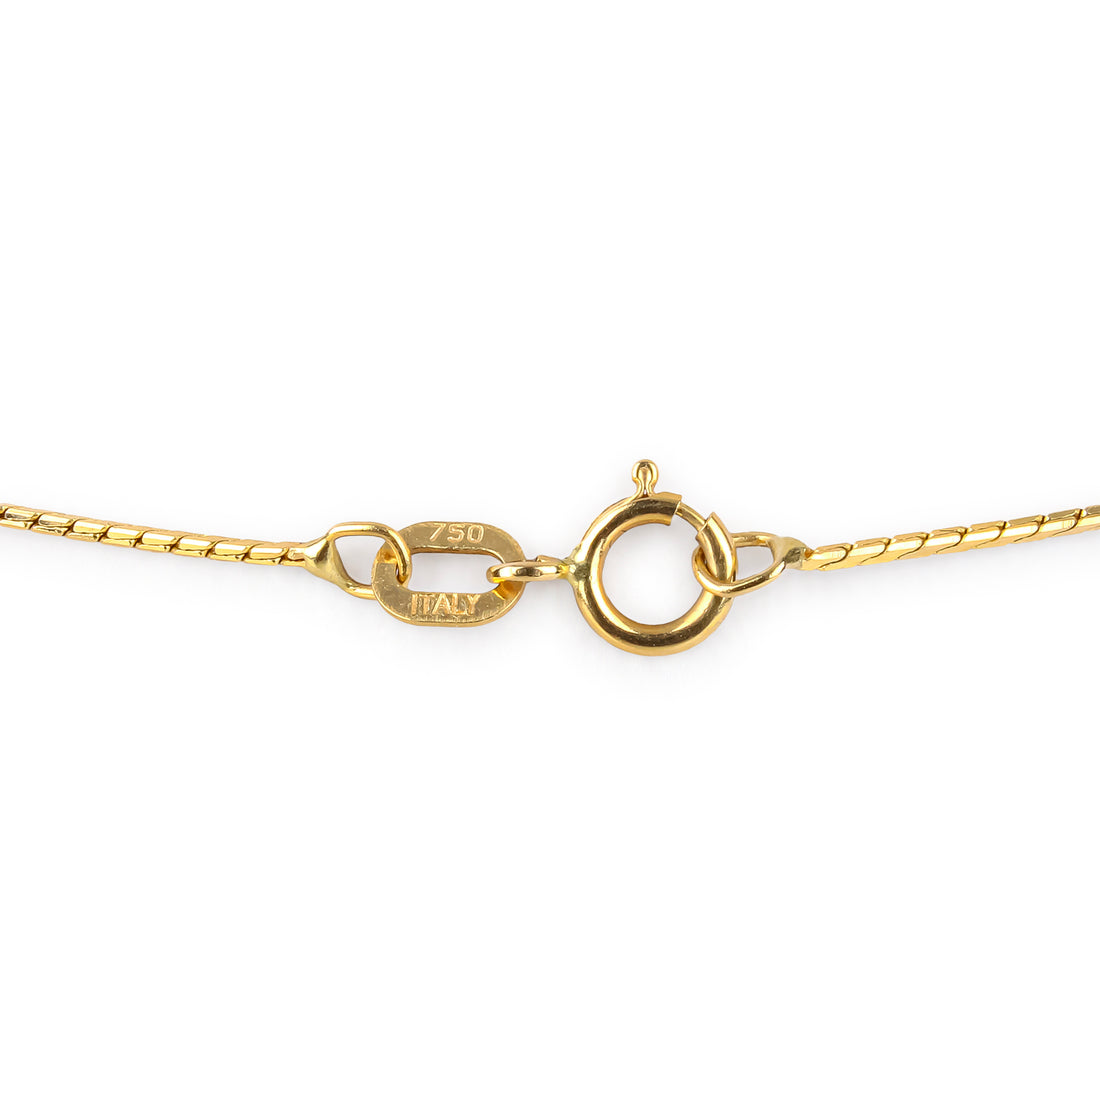 18K Yellow Gold Cubic Zirconia Heart Pendant Necklace